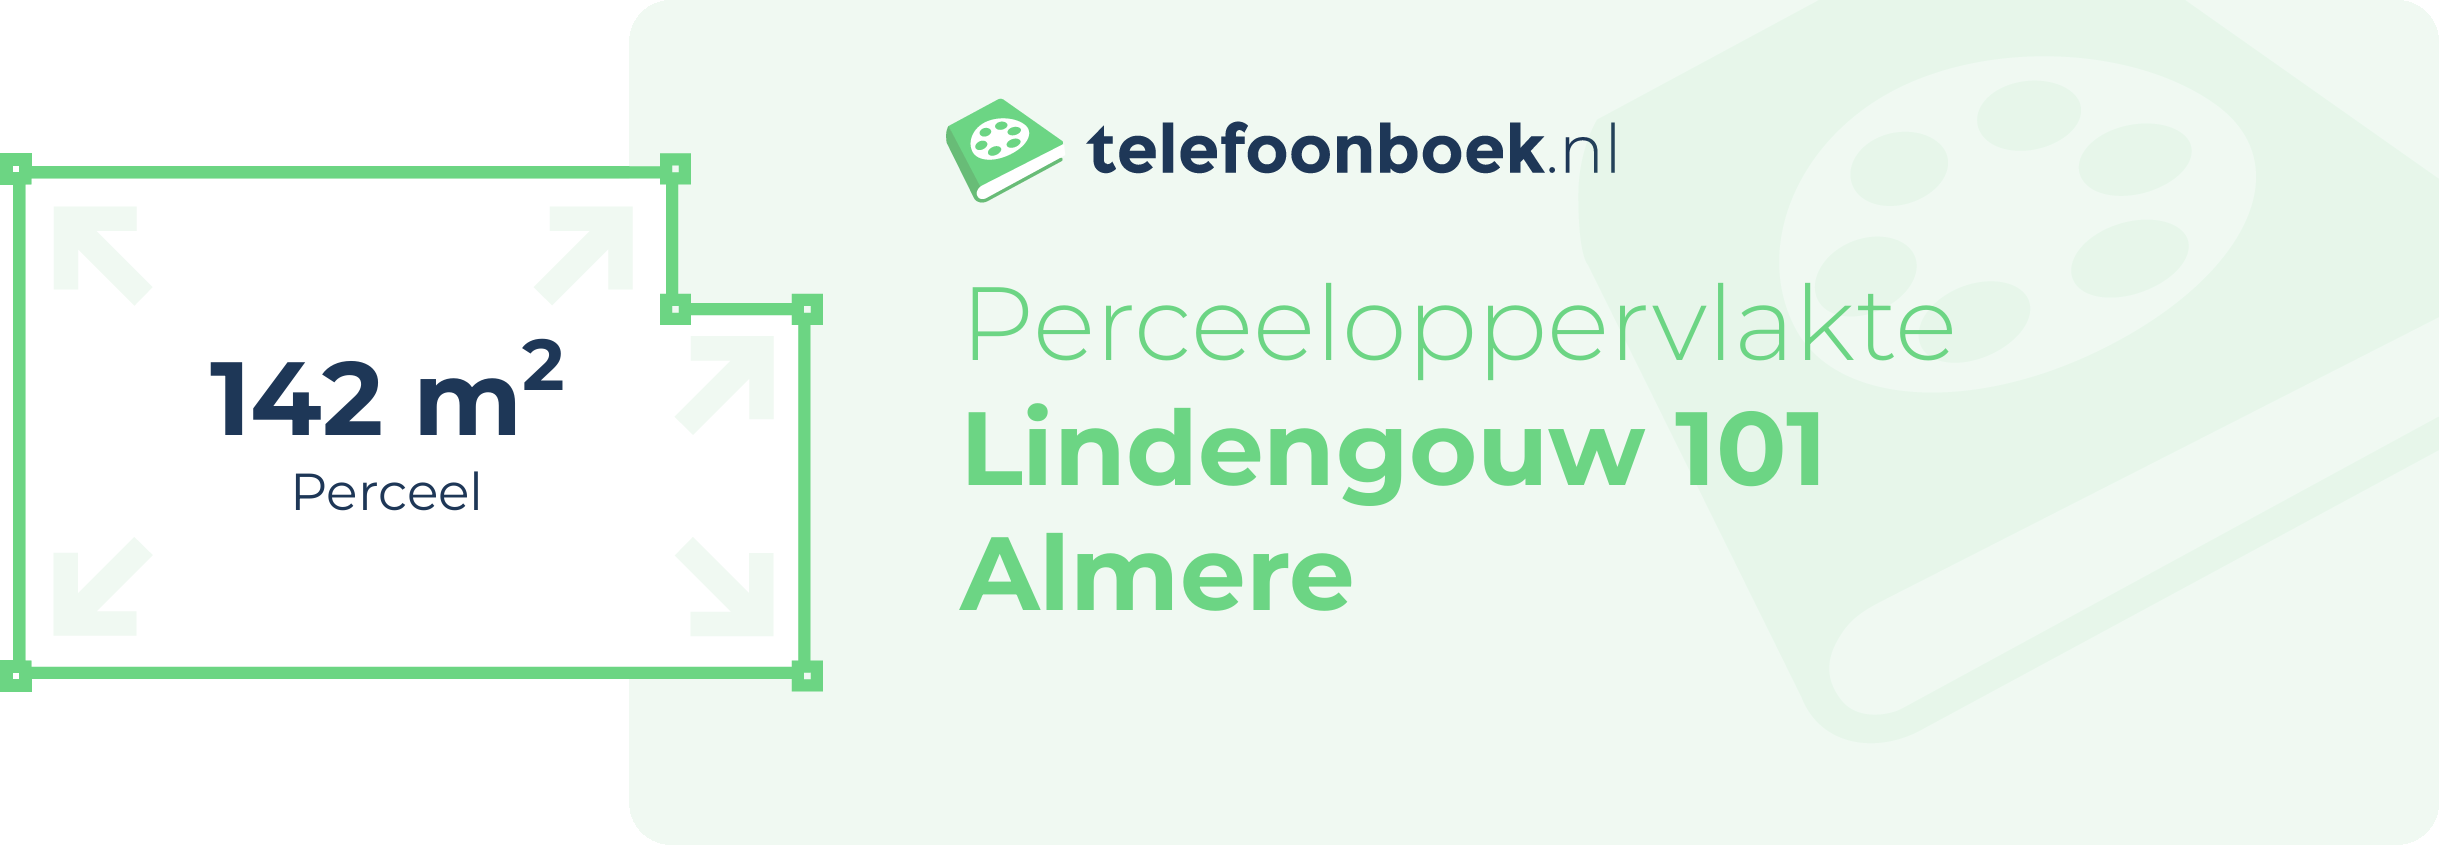 Perceeloppervlakte Lindengouw 101 Almere